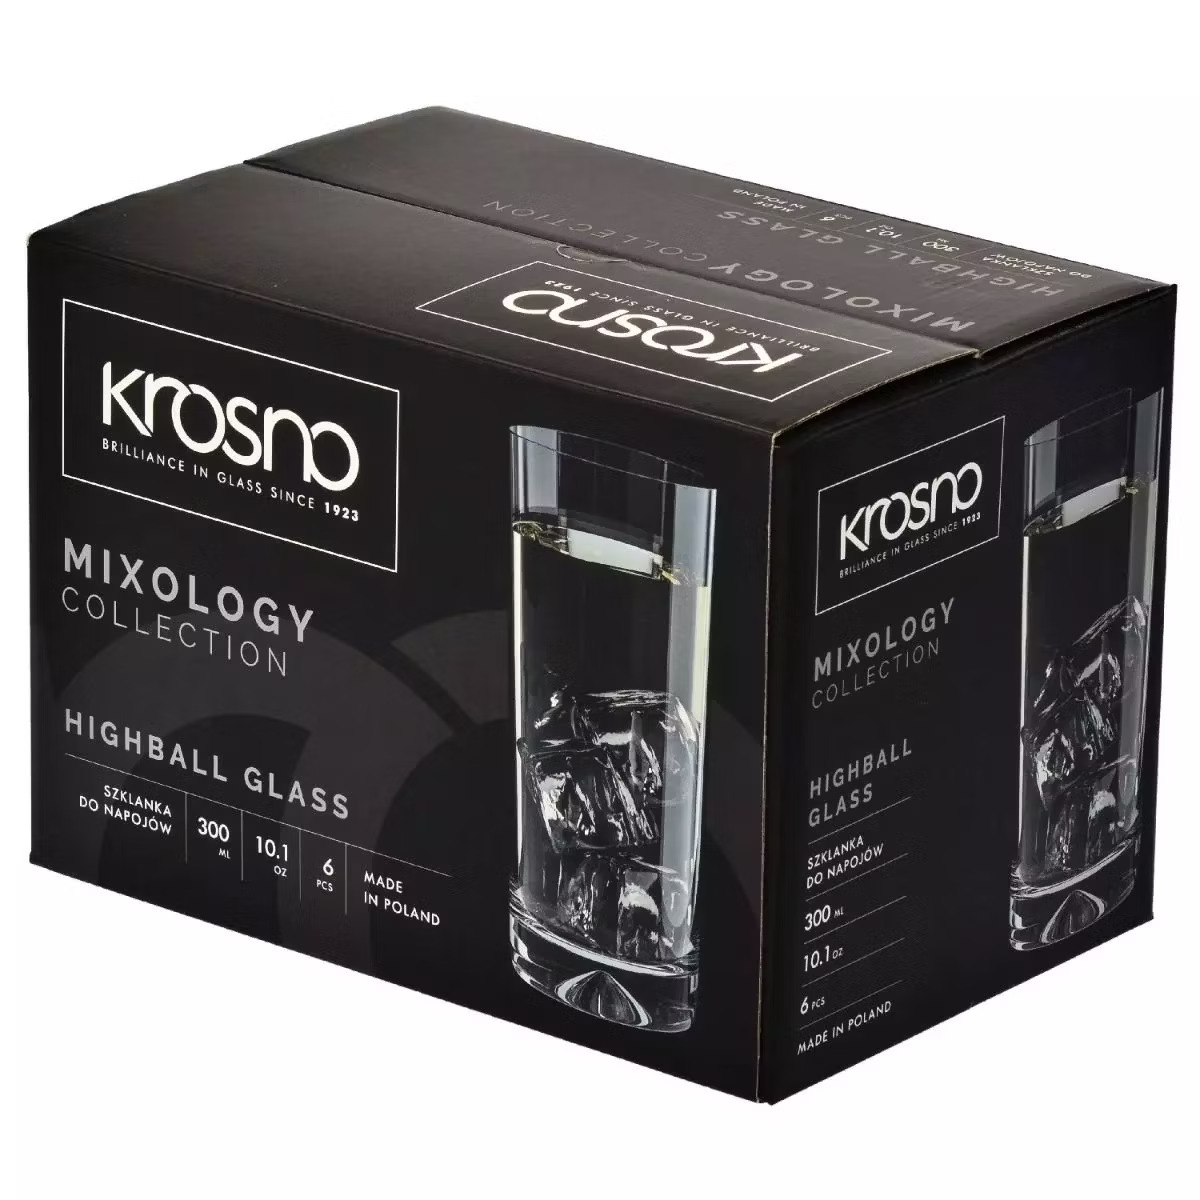 Набір високих склянок Krosno Mixology, скло, 300 мл, 6 шт. (898926) - фото 3